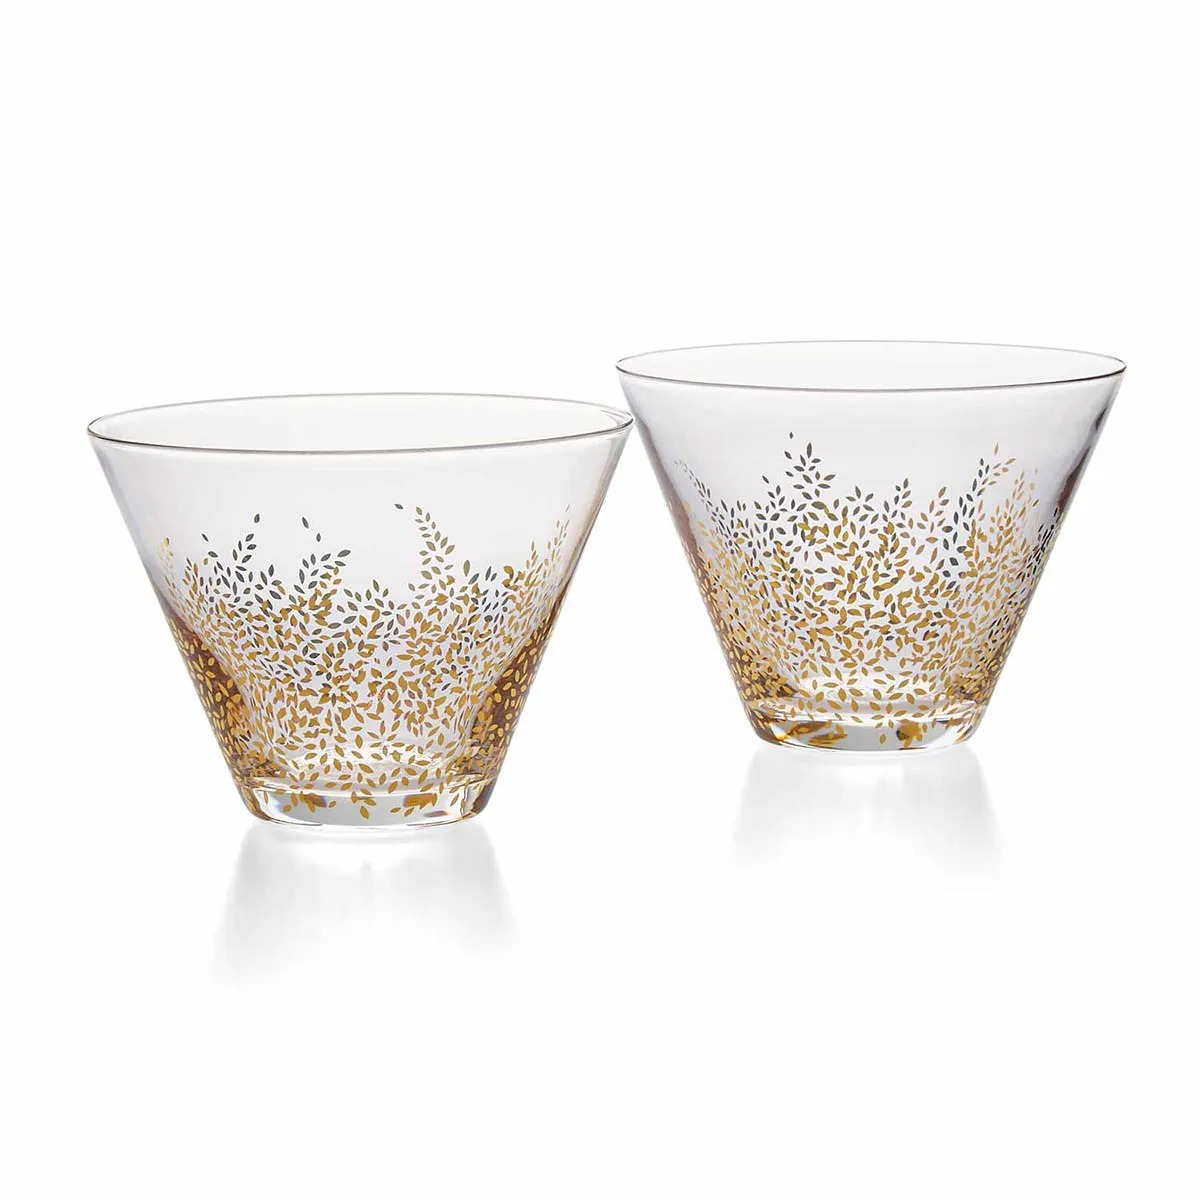 Sara Miller London Chelsea Glass Bowls - Set of 2